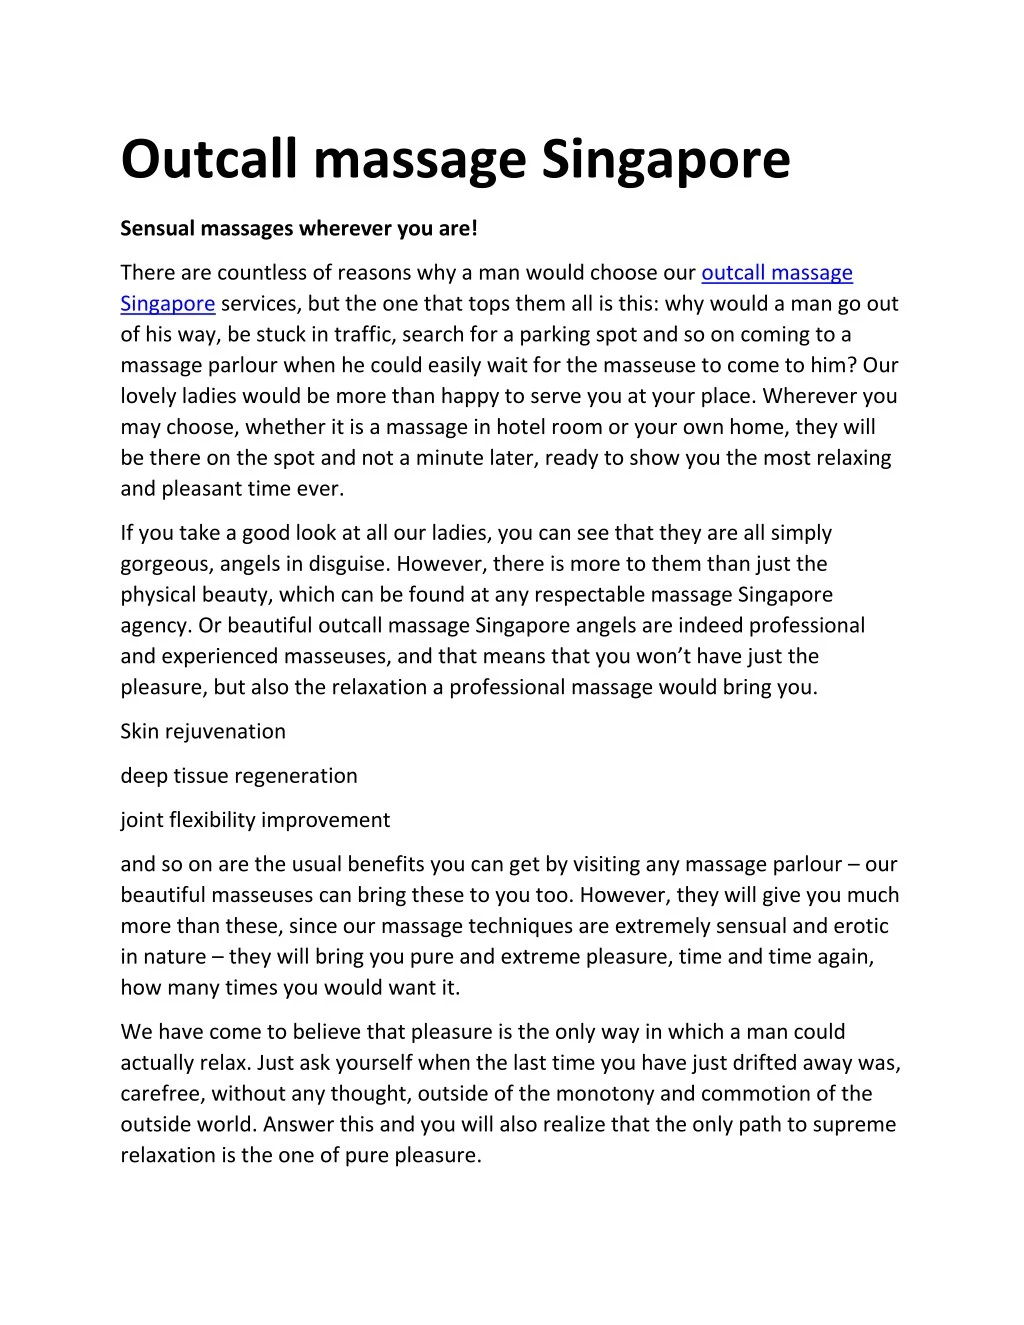 outcall massage singapore n.